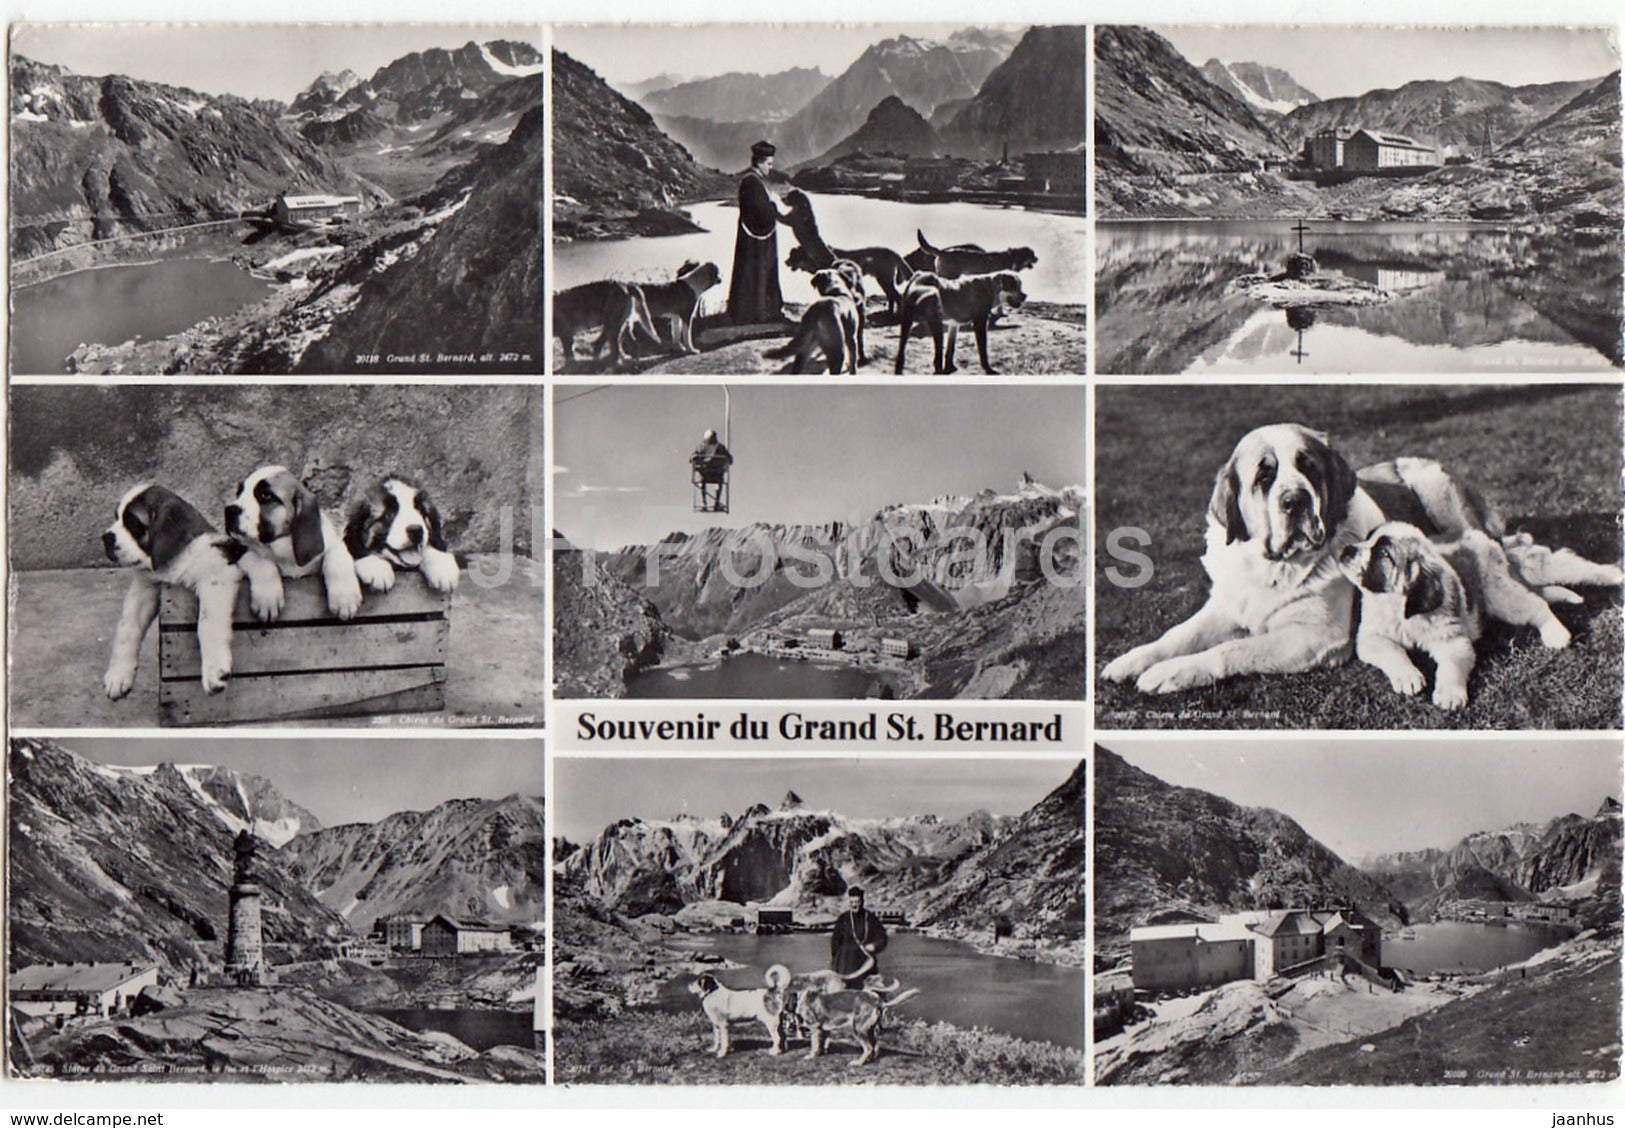 Souvenir du Grand St Bernard - dog - 1961 - Switzerland - used - JH Postcards